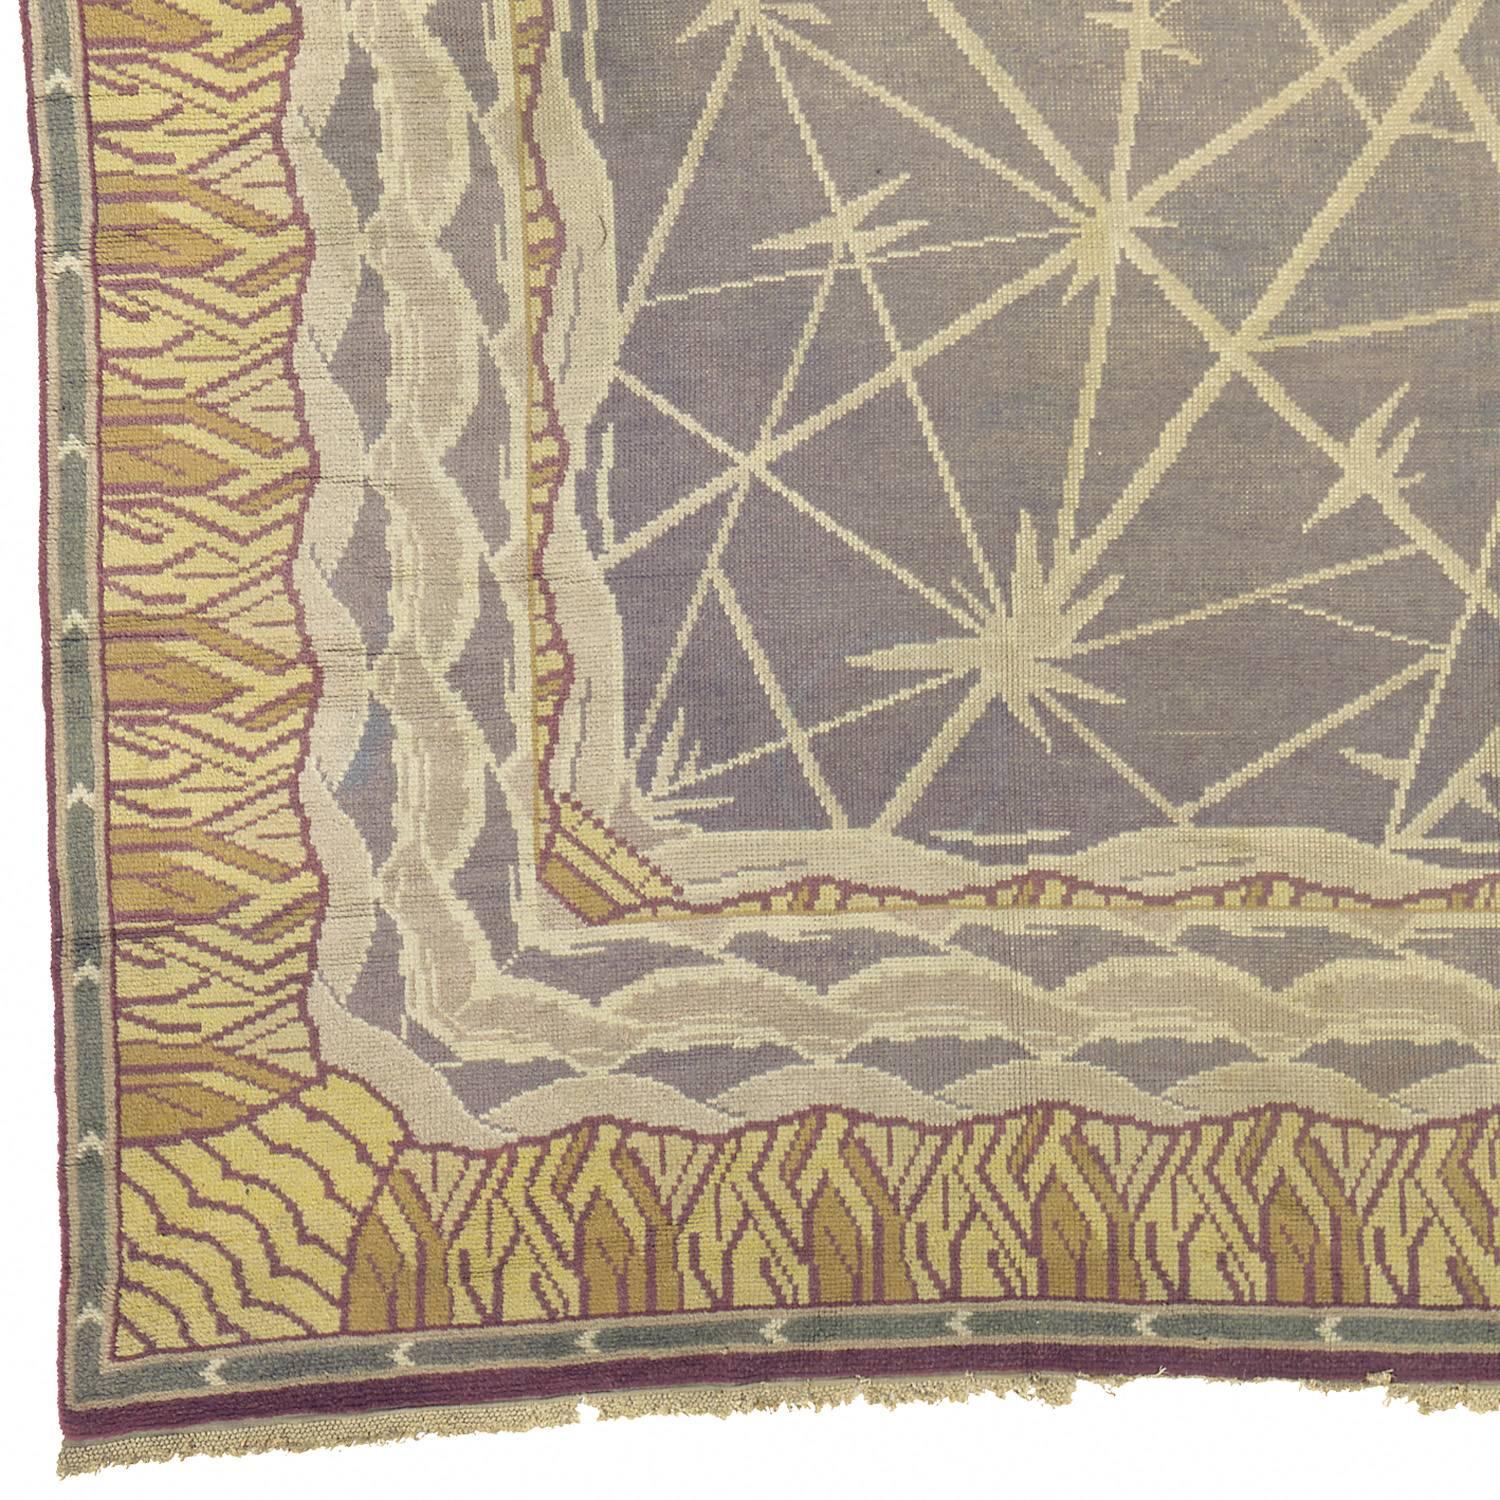 Scandinavian Modern Early-20th Century Swedish Pile-Weave Carpet by Selma Giobel For Sale